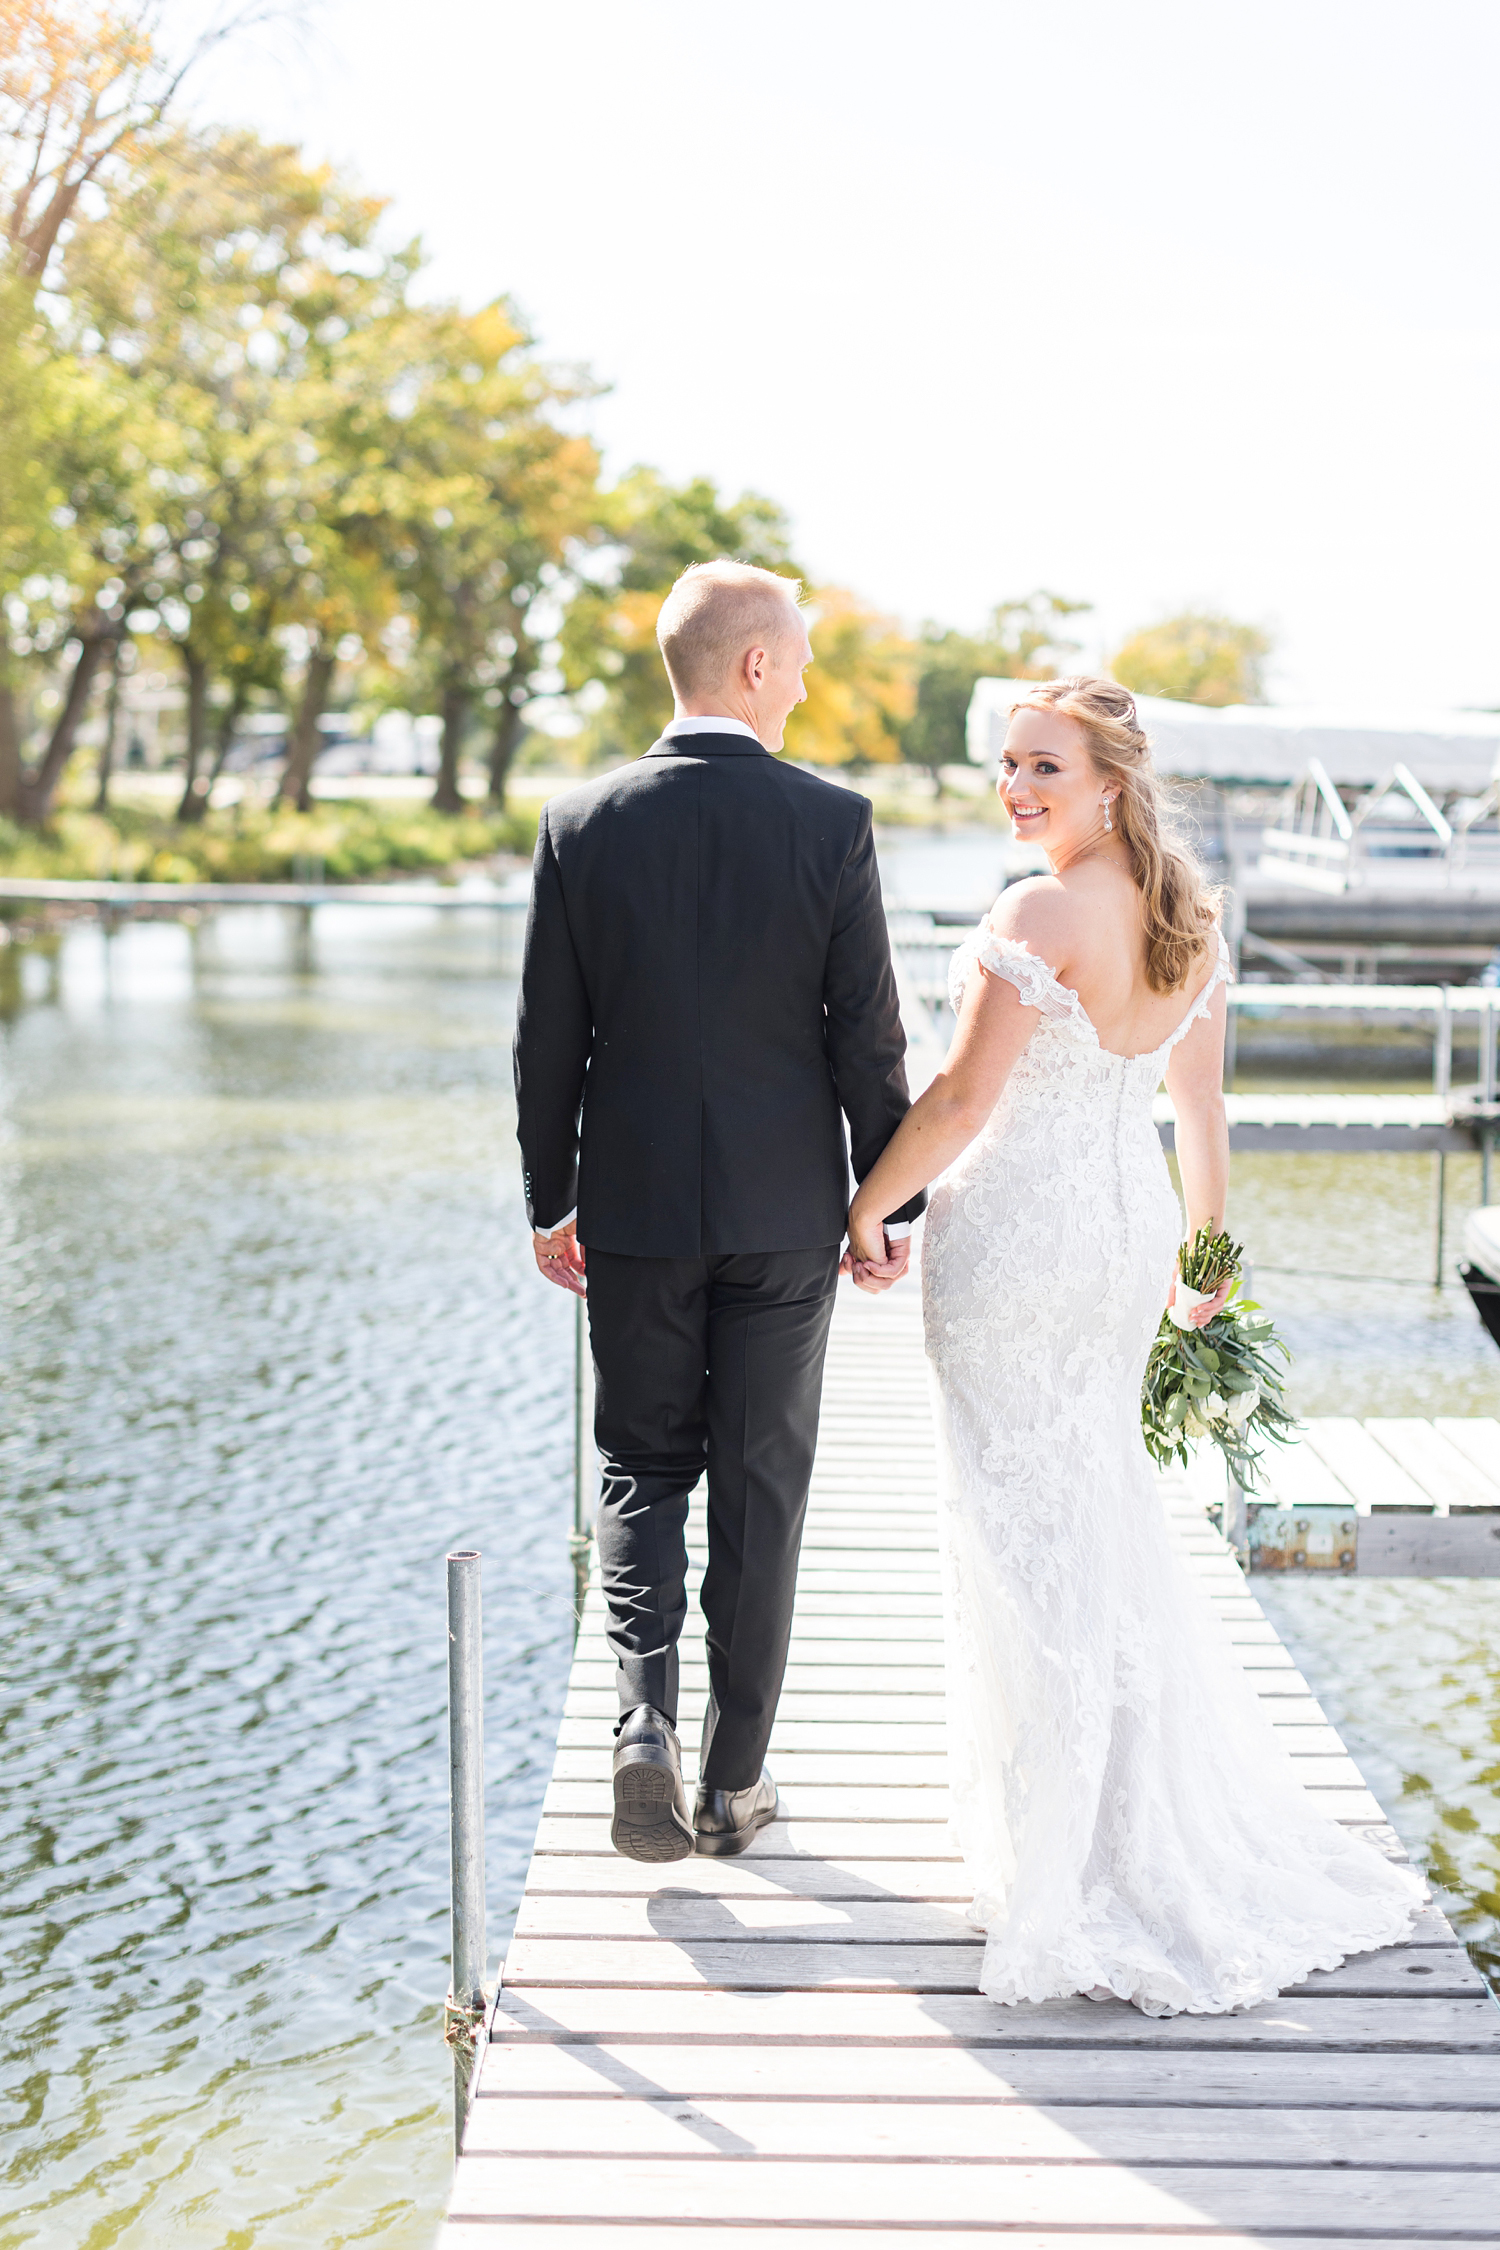 Brenna looks back as her groom, Jacob, leads her across a dock at Five Island Lake, Emmetsburg, Iowa | CB Studio